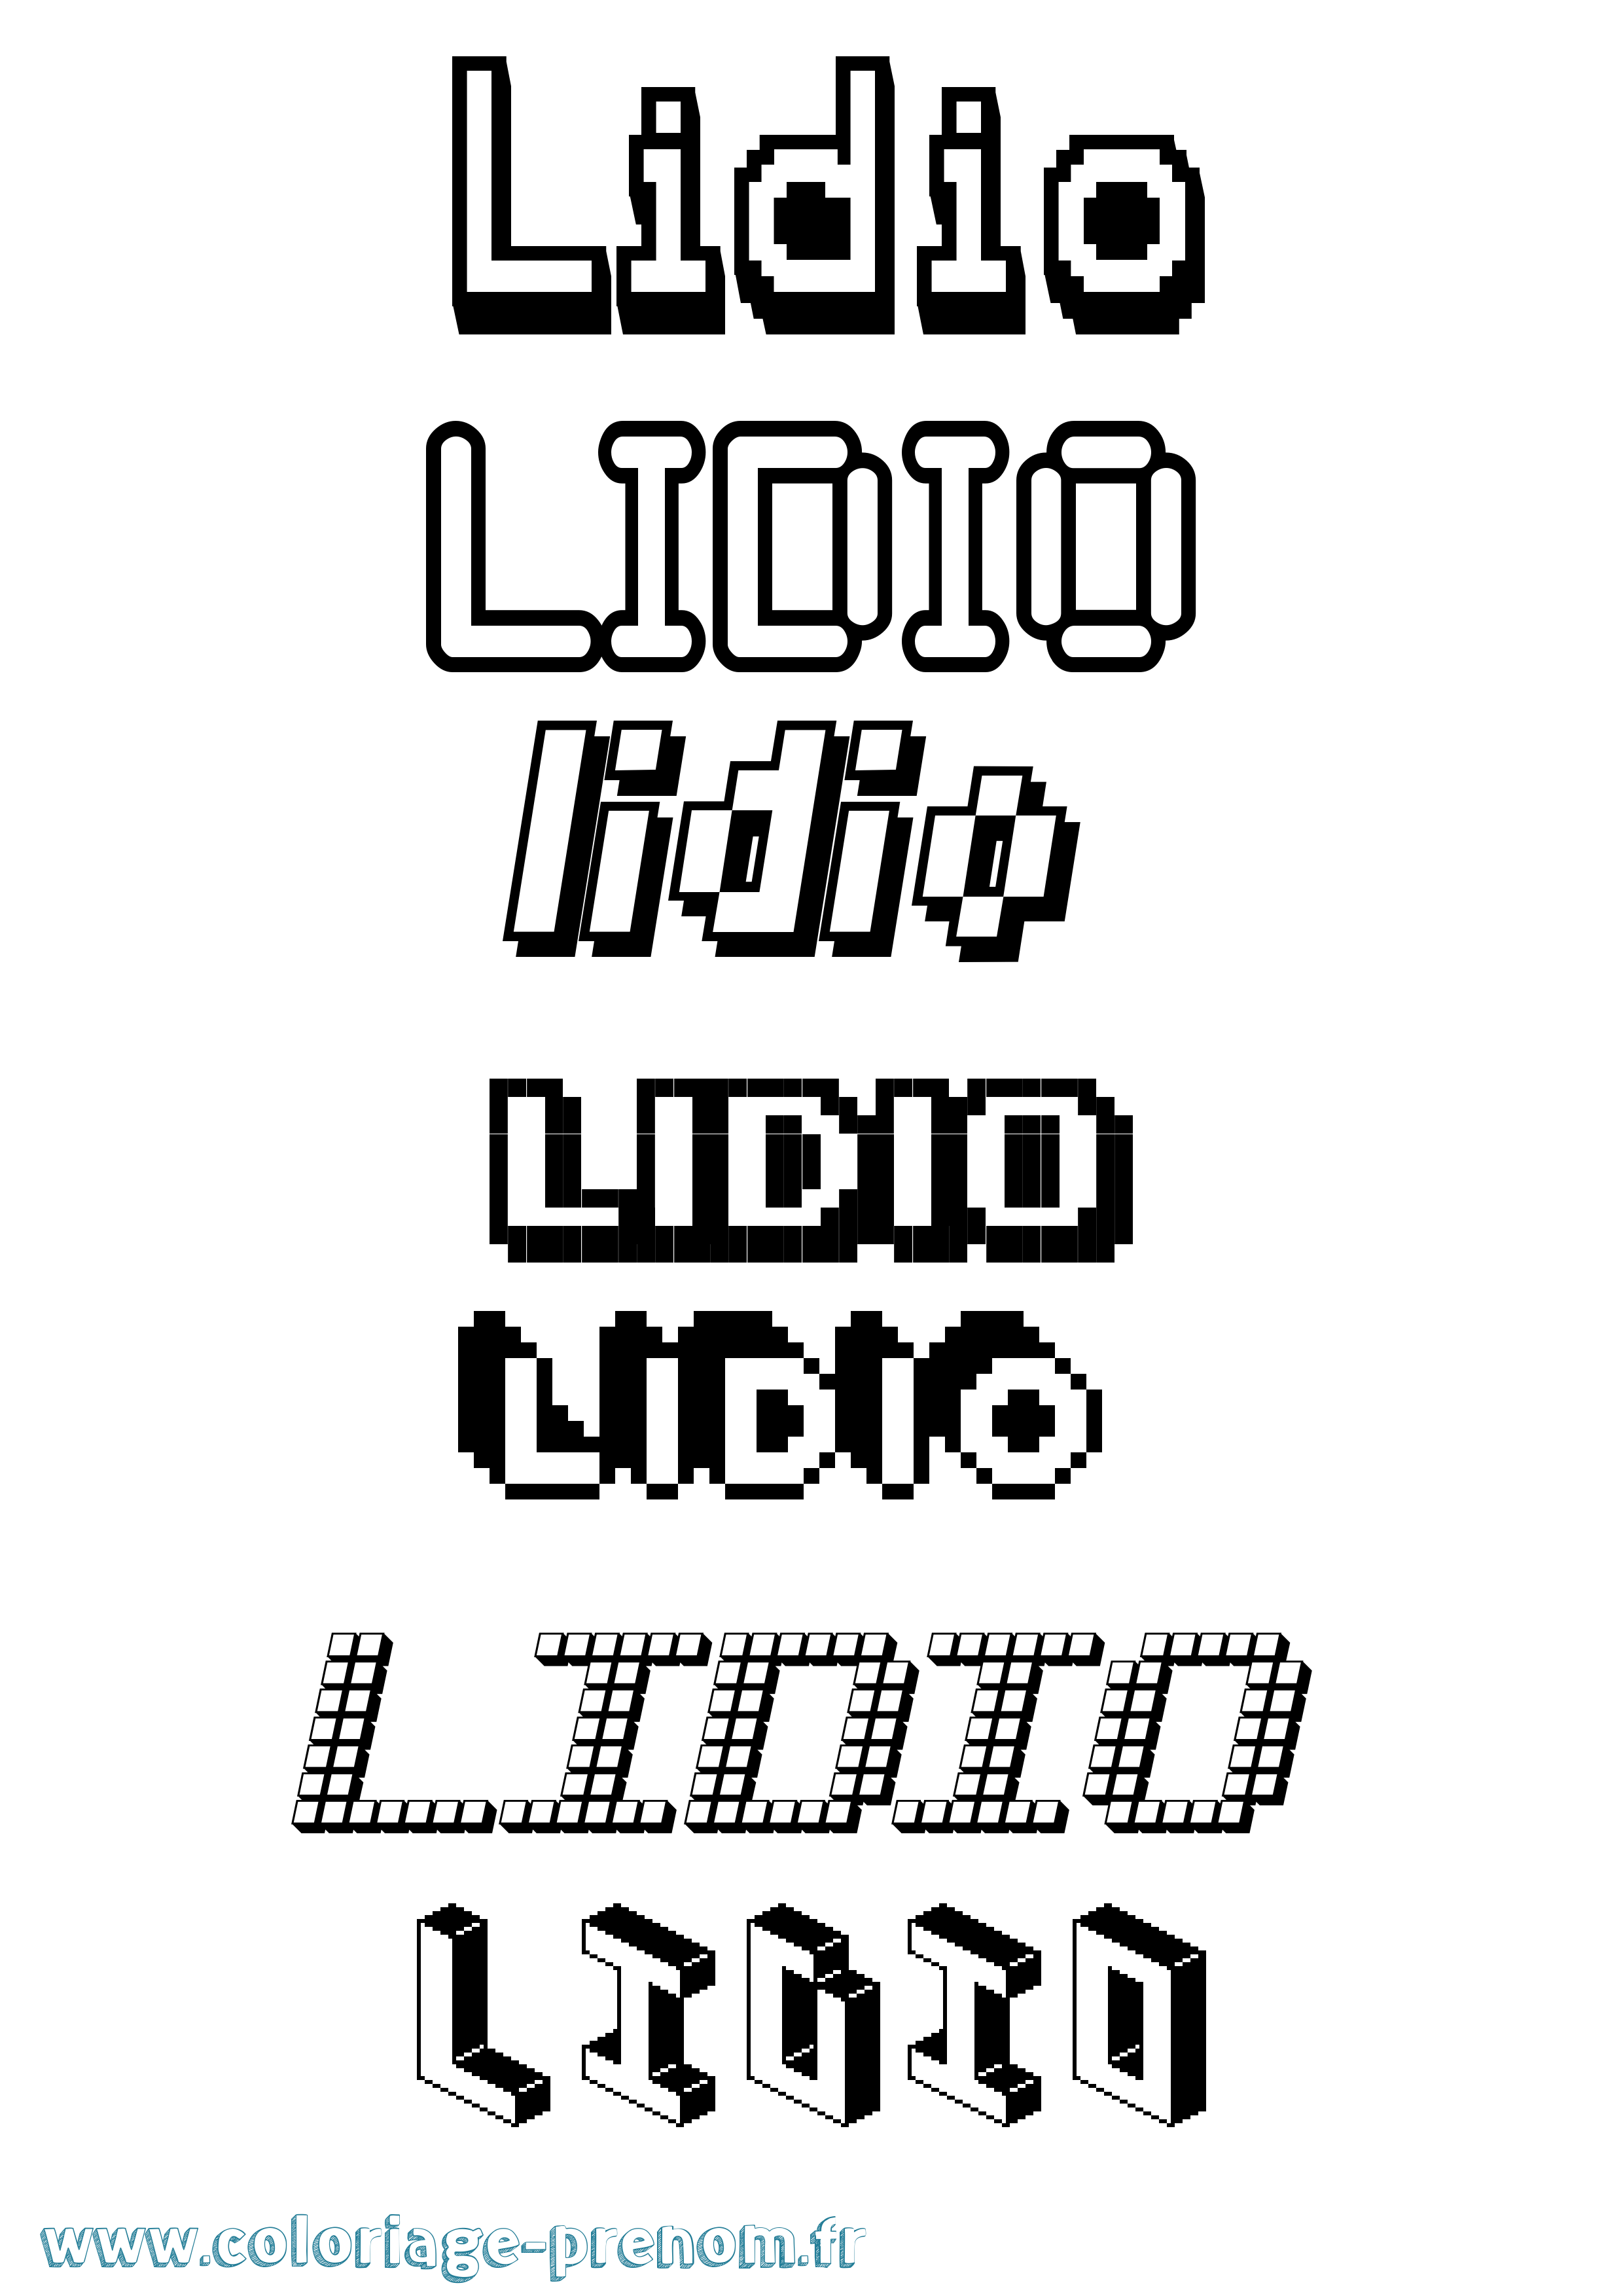 Coloriage prénom Lidio Pixel